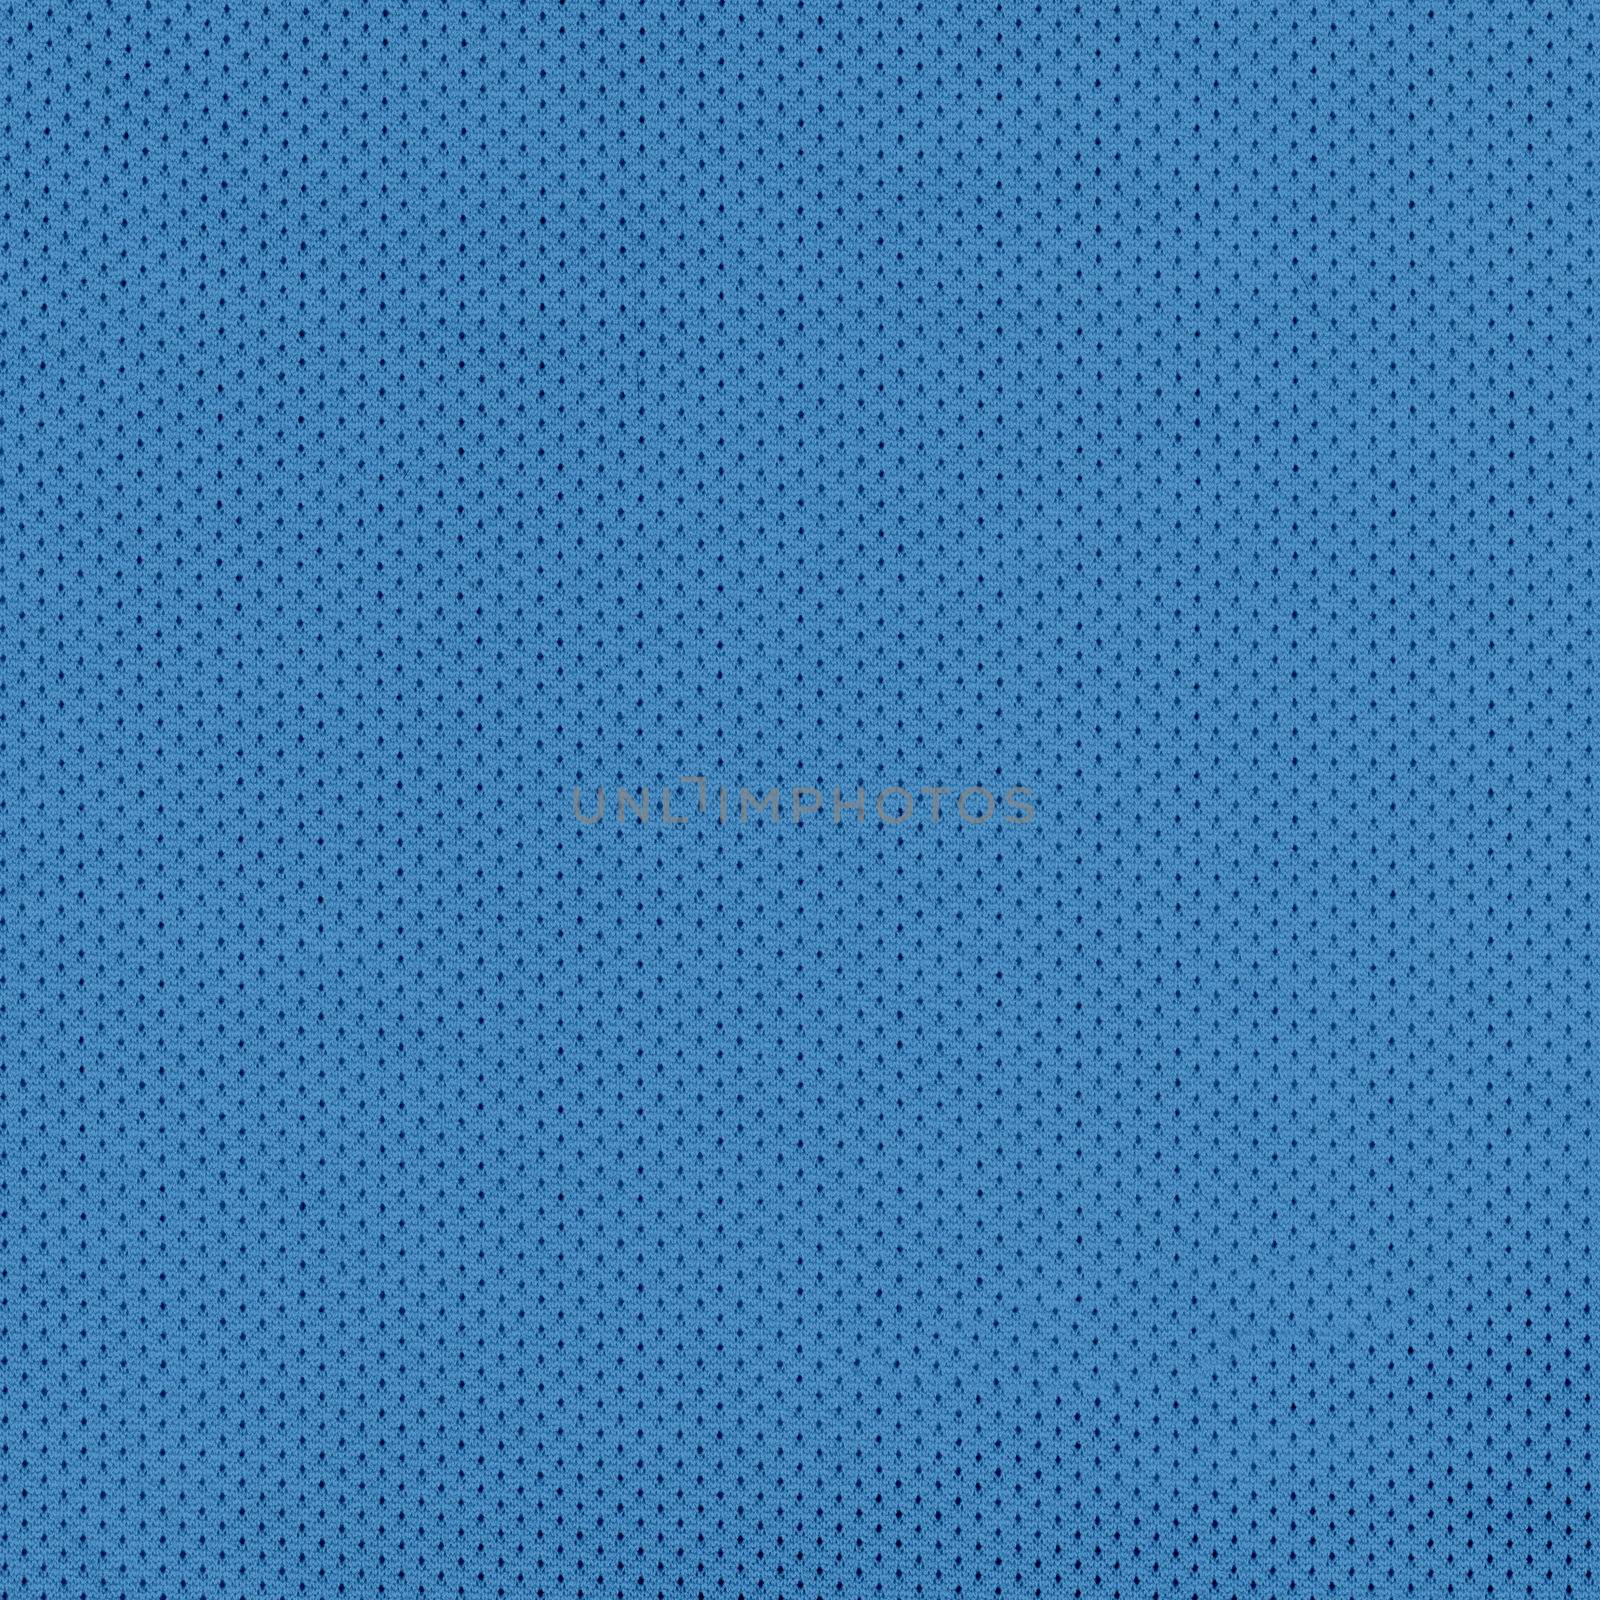 Closeup on a Blue Sport Jersey Mesh Textile